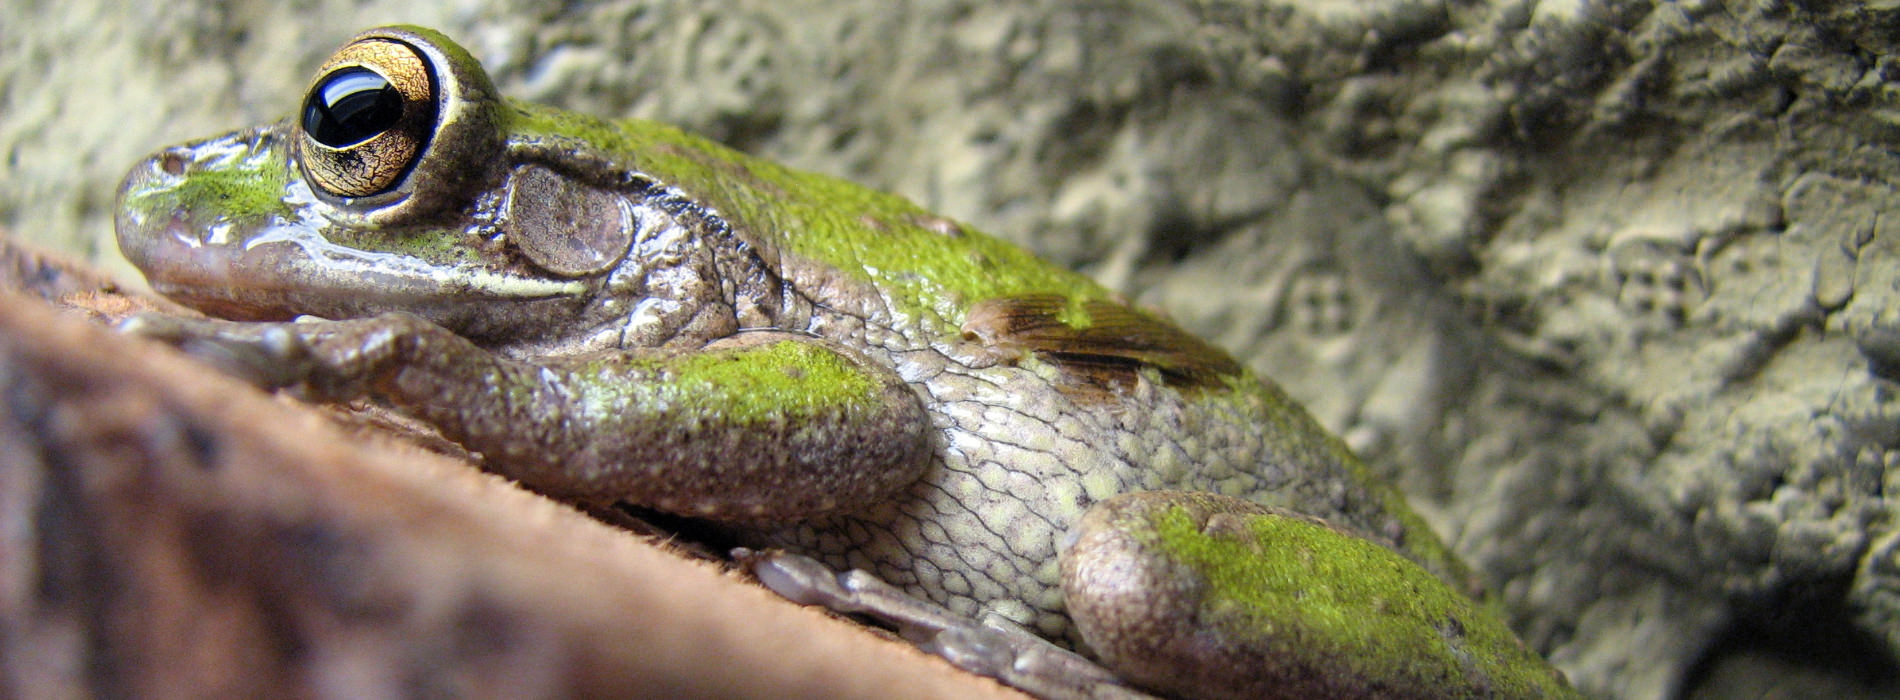 Cuban Tree Frog camouflaged on slab rock with bulging golden eyes